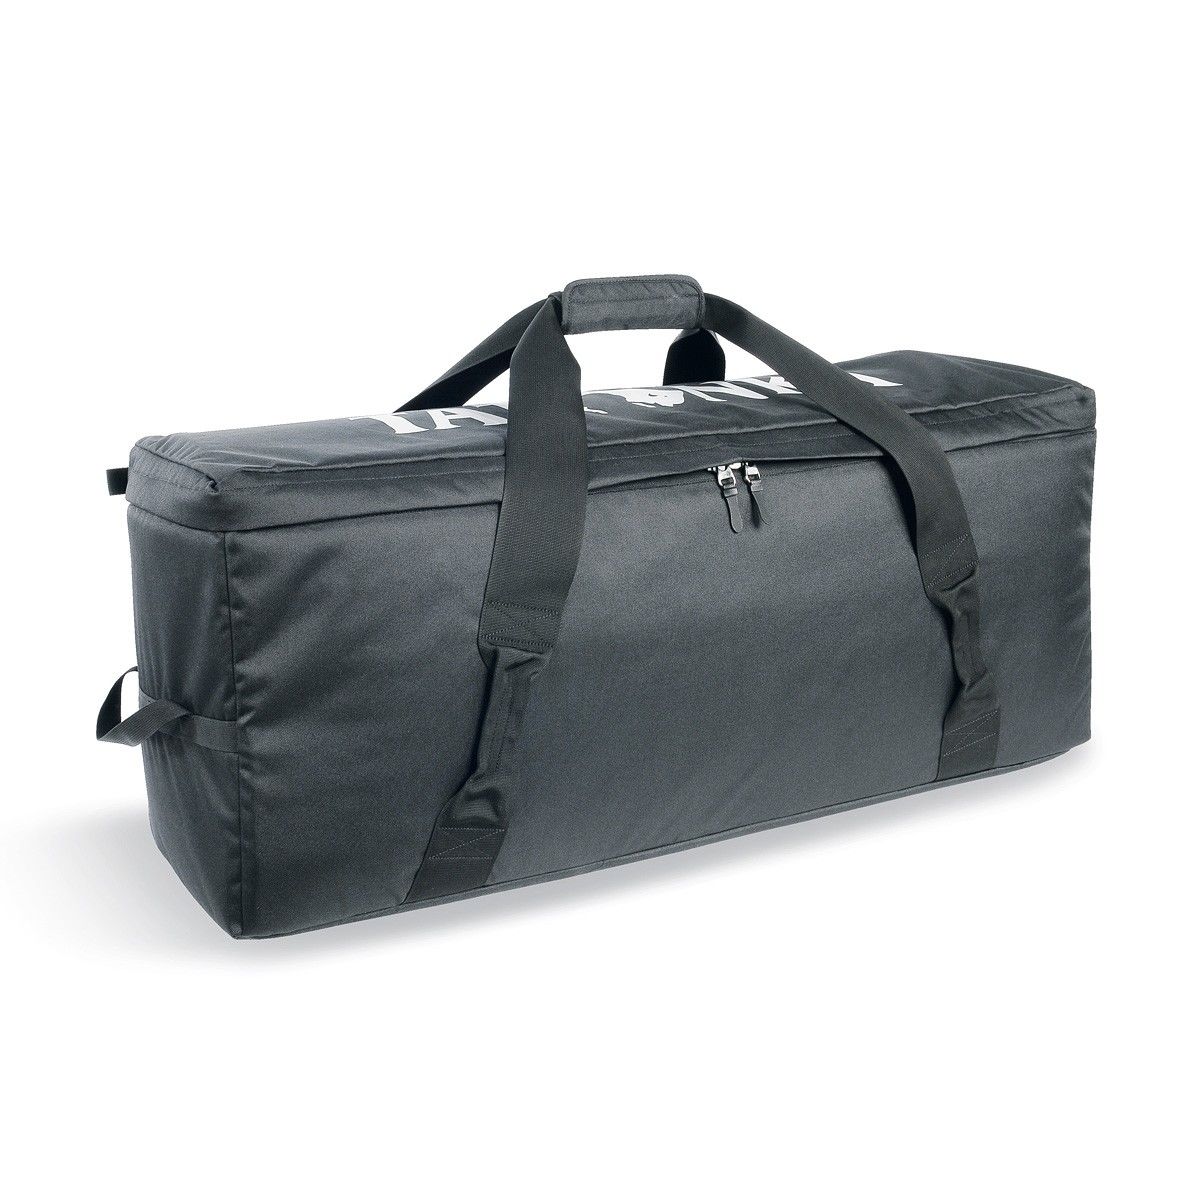 Tatonka Gear Bag 100 Schwarz- Reisetaschen- Grsse 100l - Farbe Black